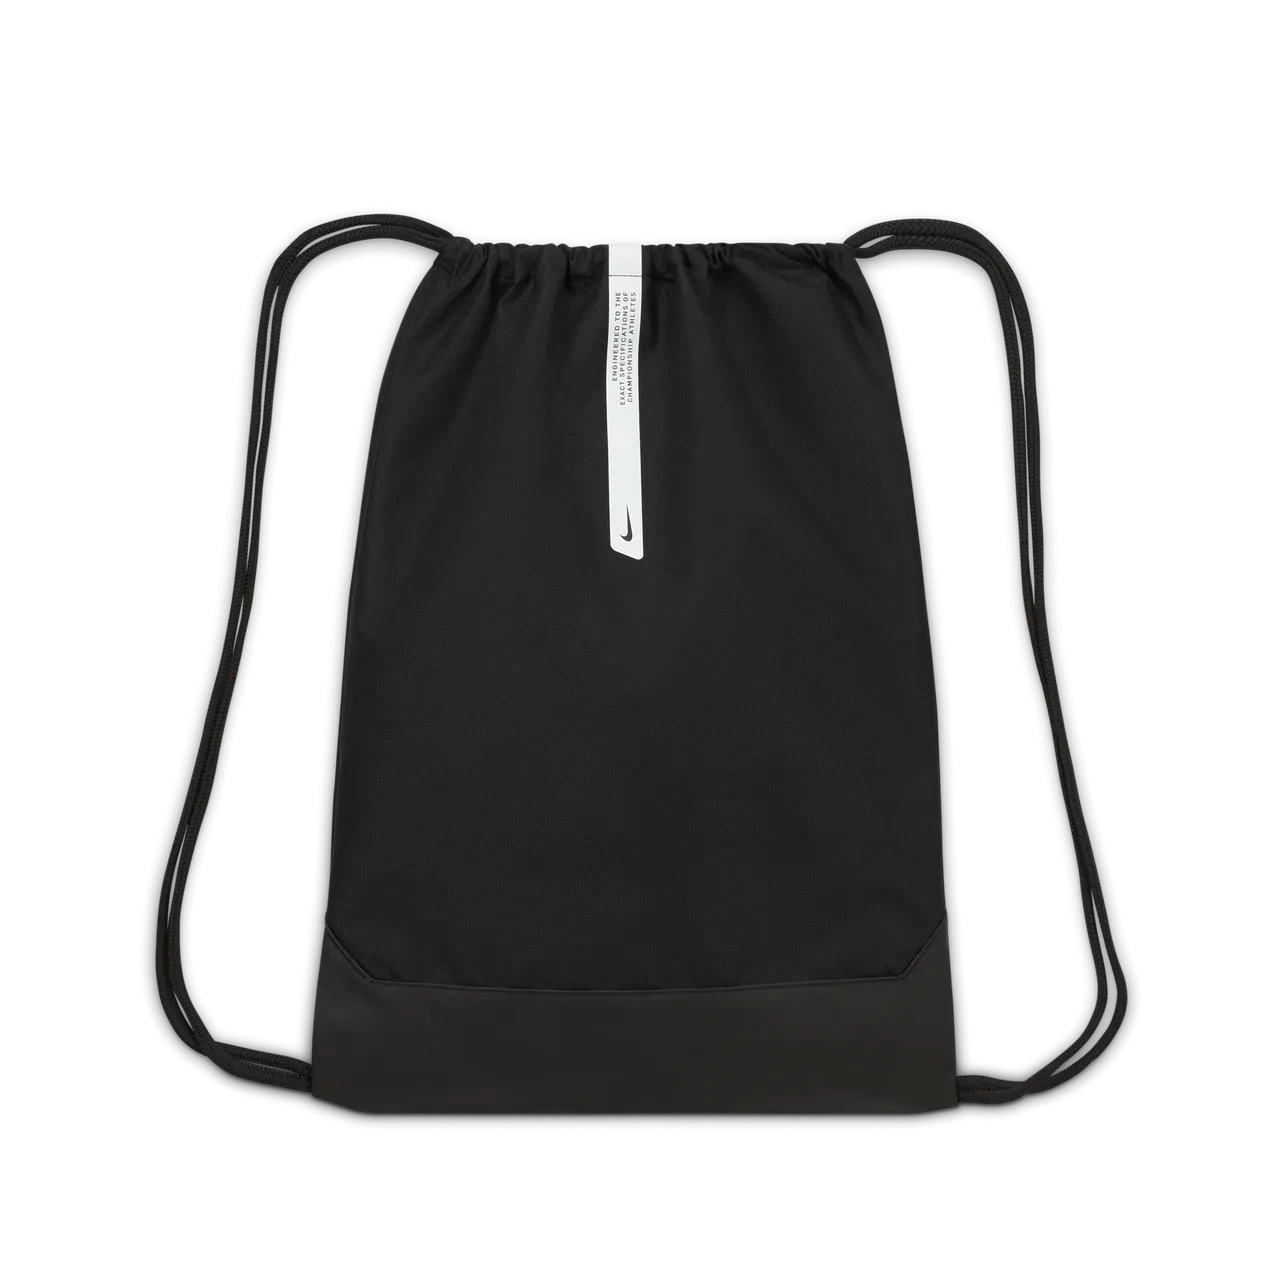 Nike Academy Football Gymsack (18L) - Black - Polyester